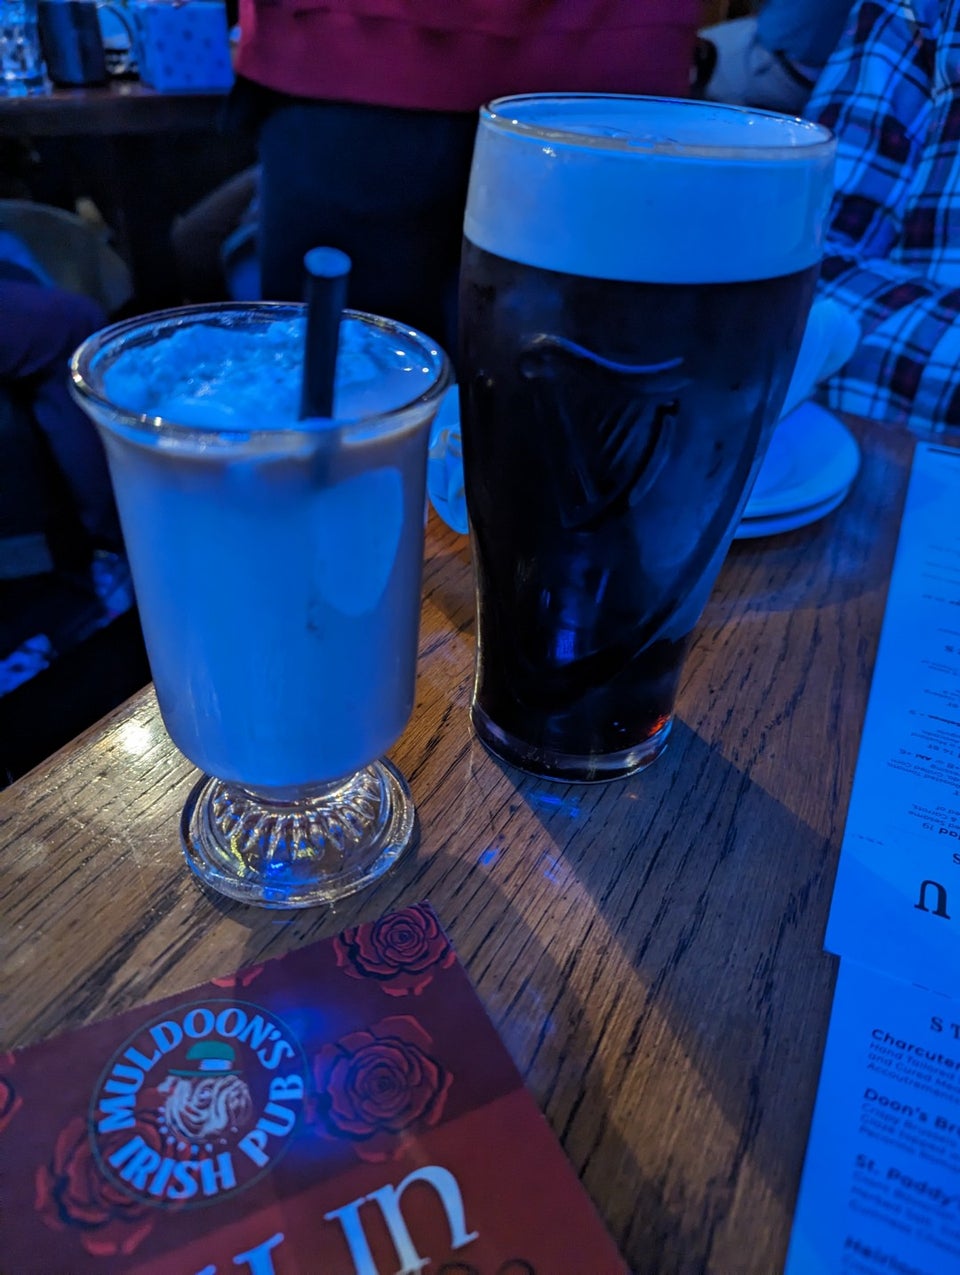 Muldoon's Irish Pub